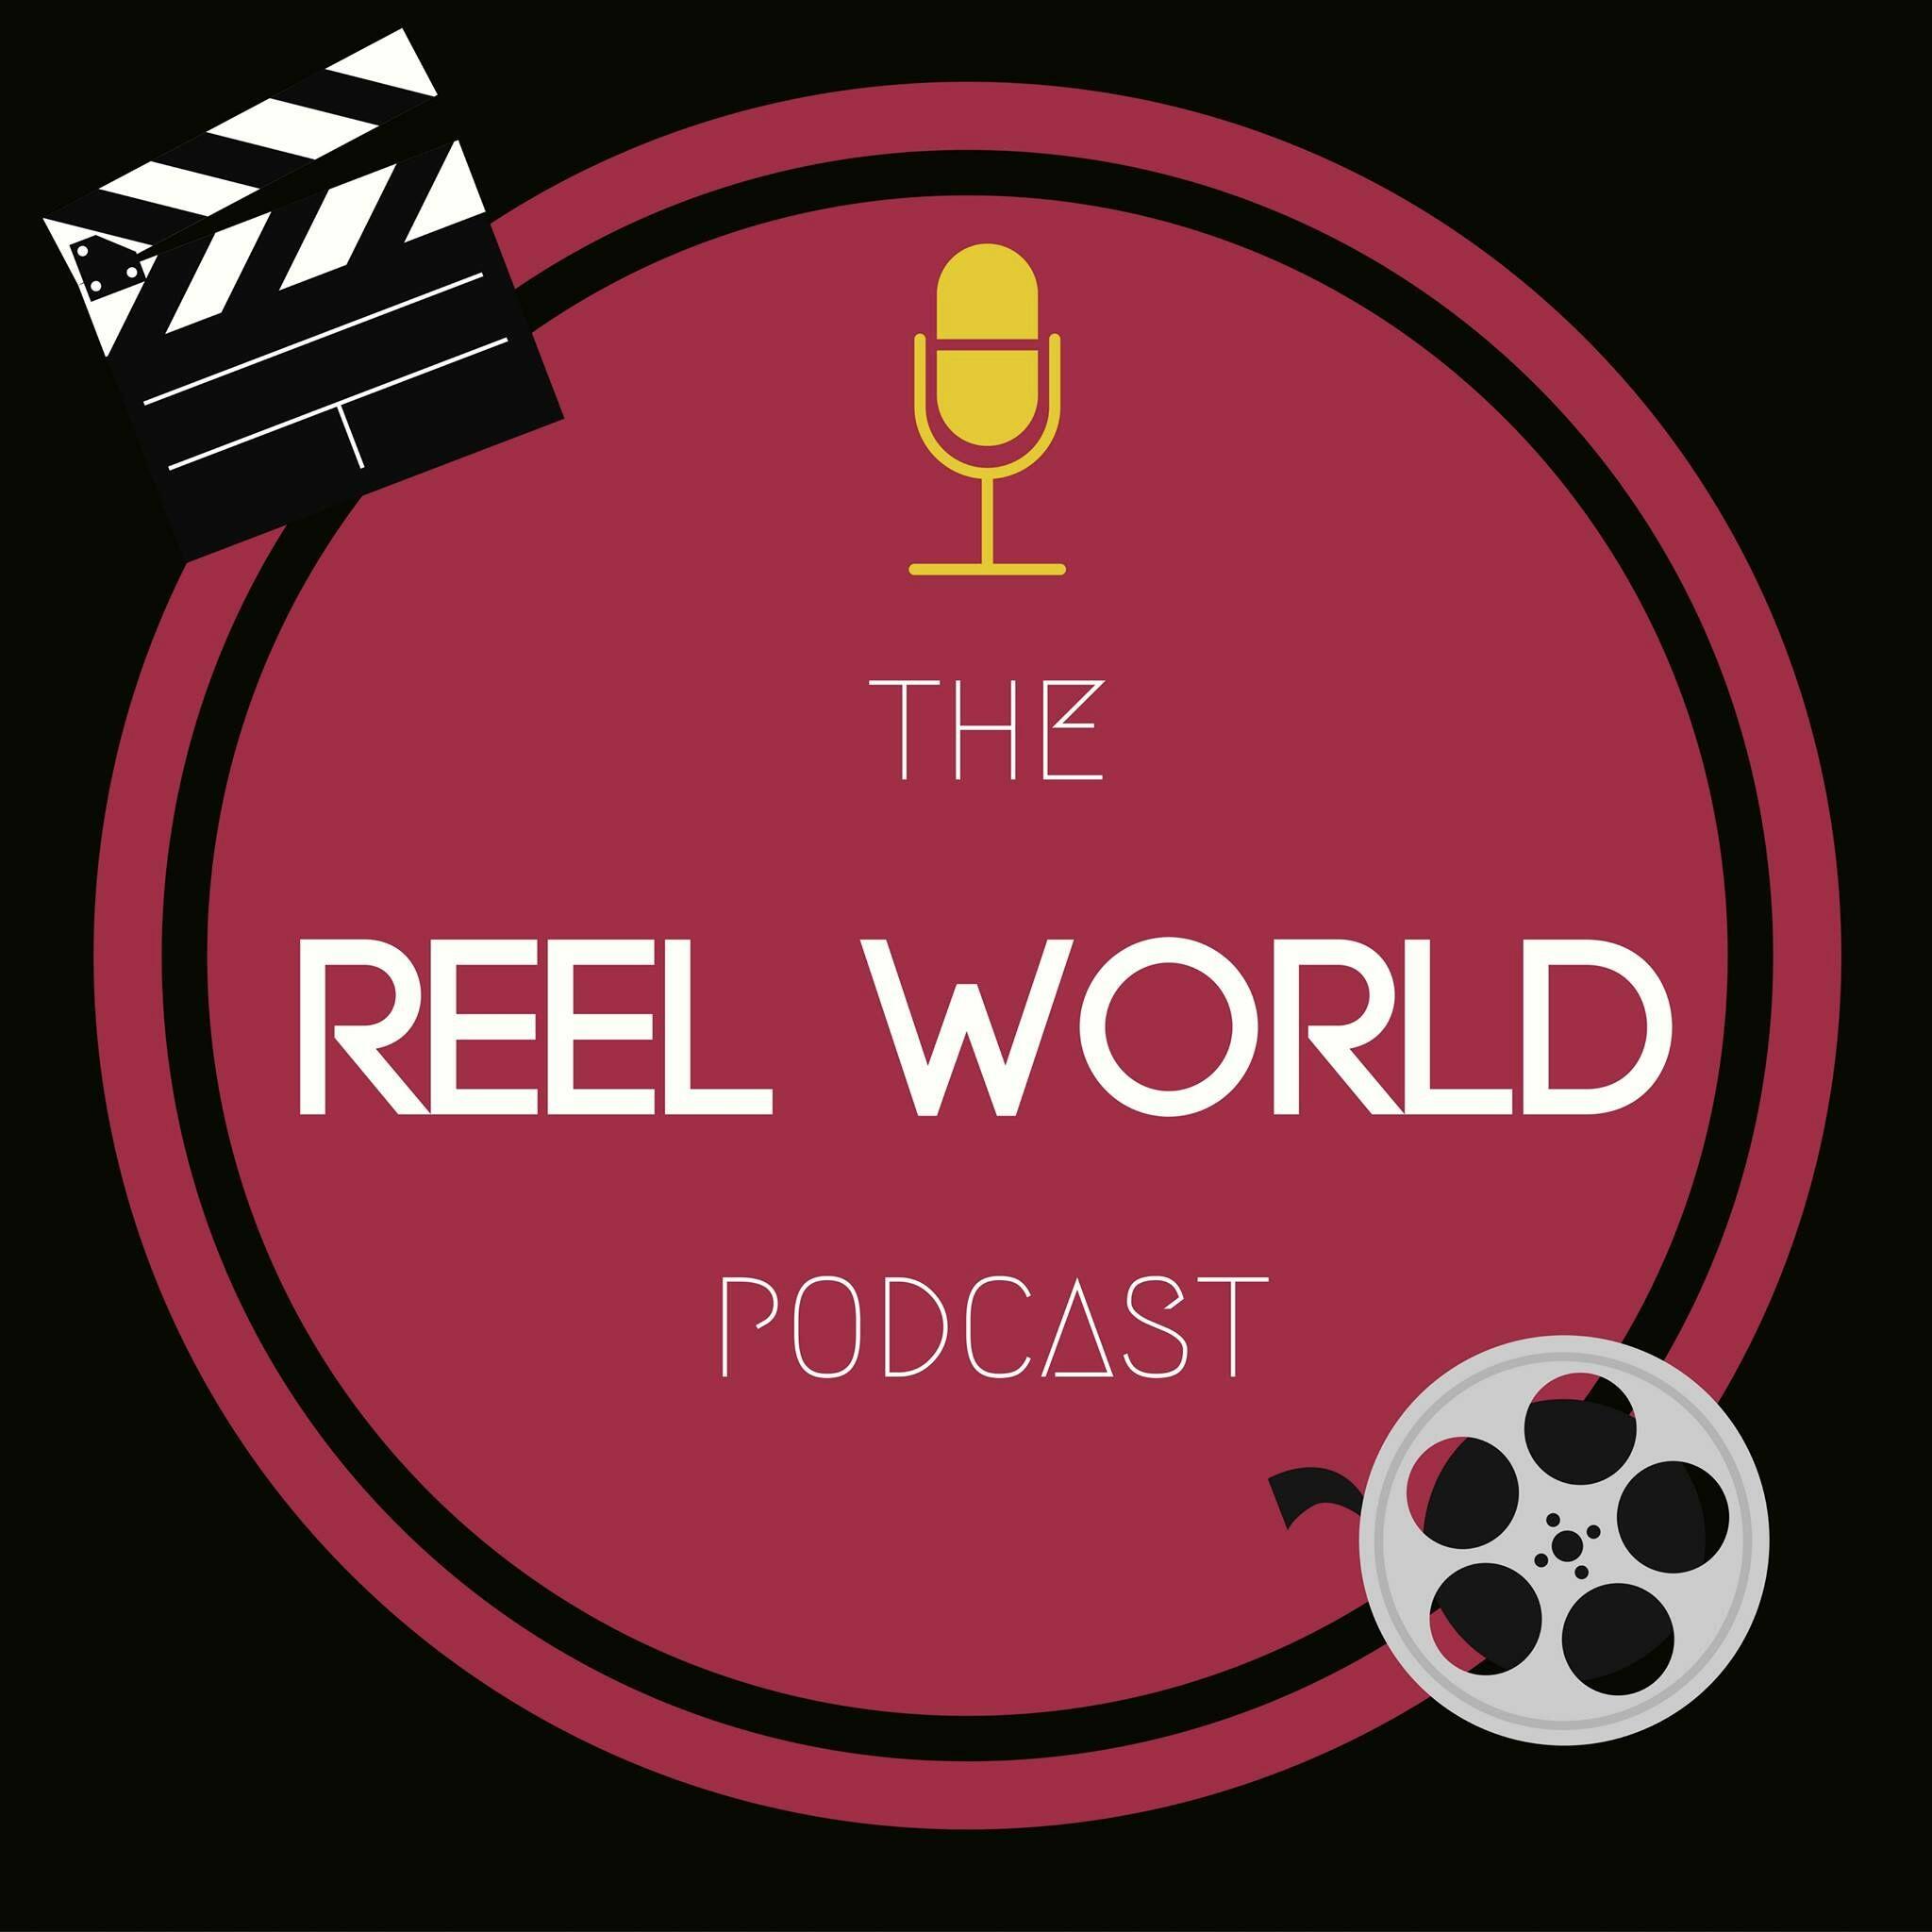 World of reel. Рил ворлд. Адрес рил ворлд. Podcast Cover Reels.